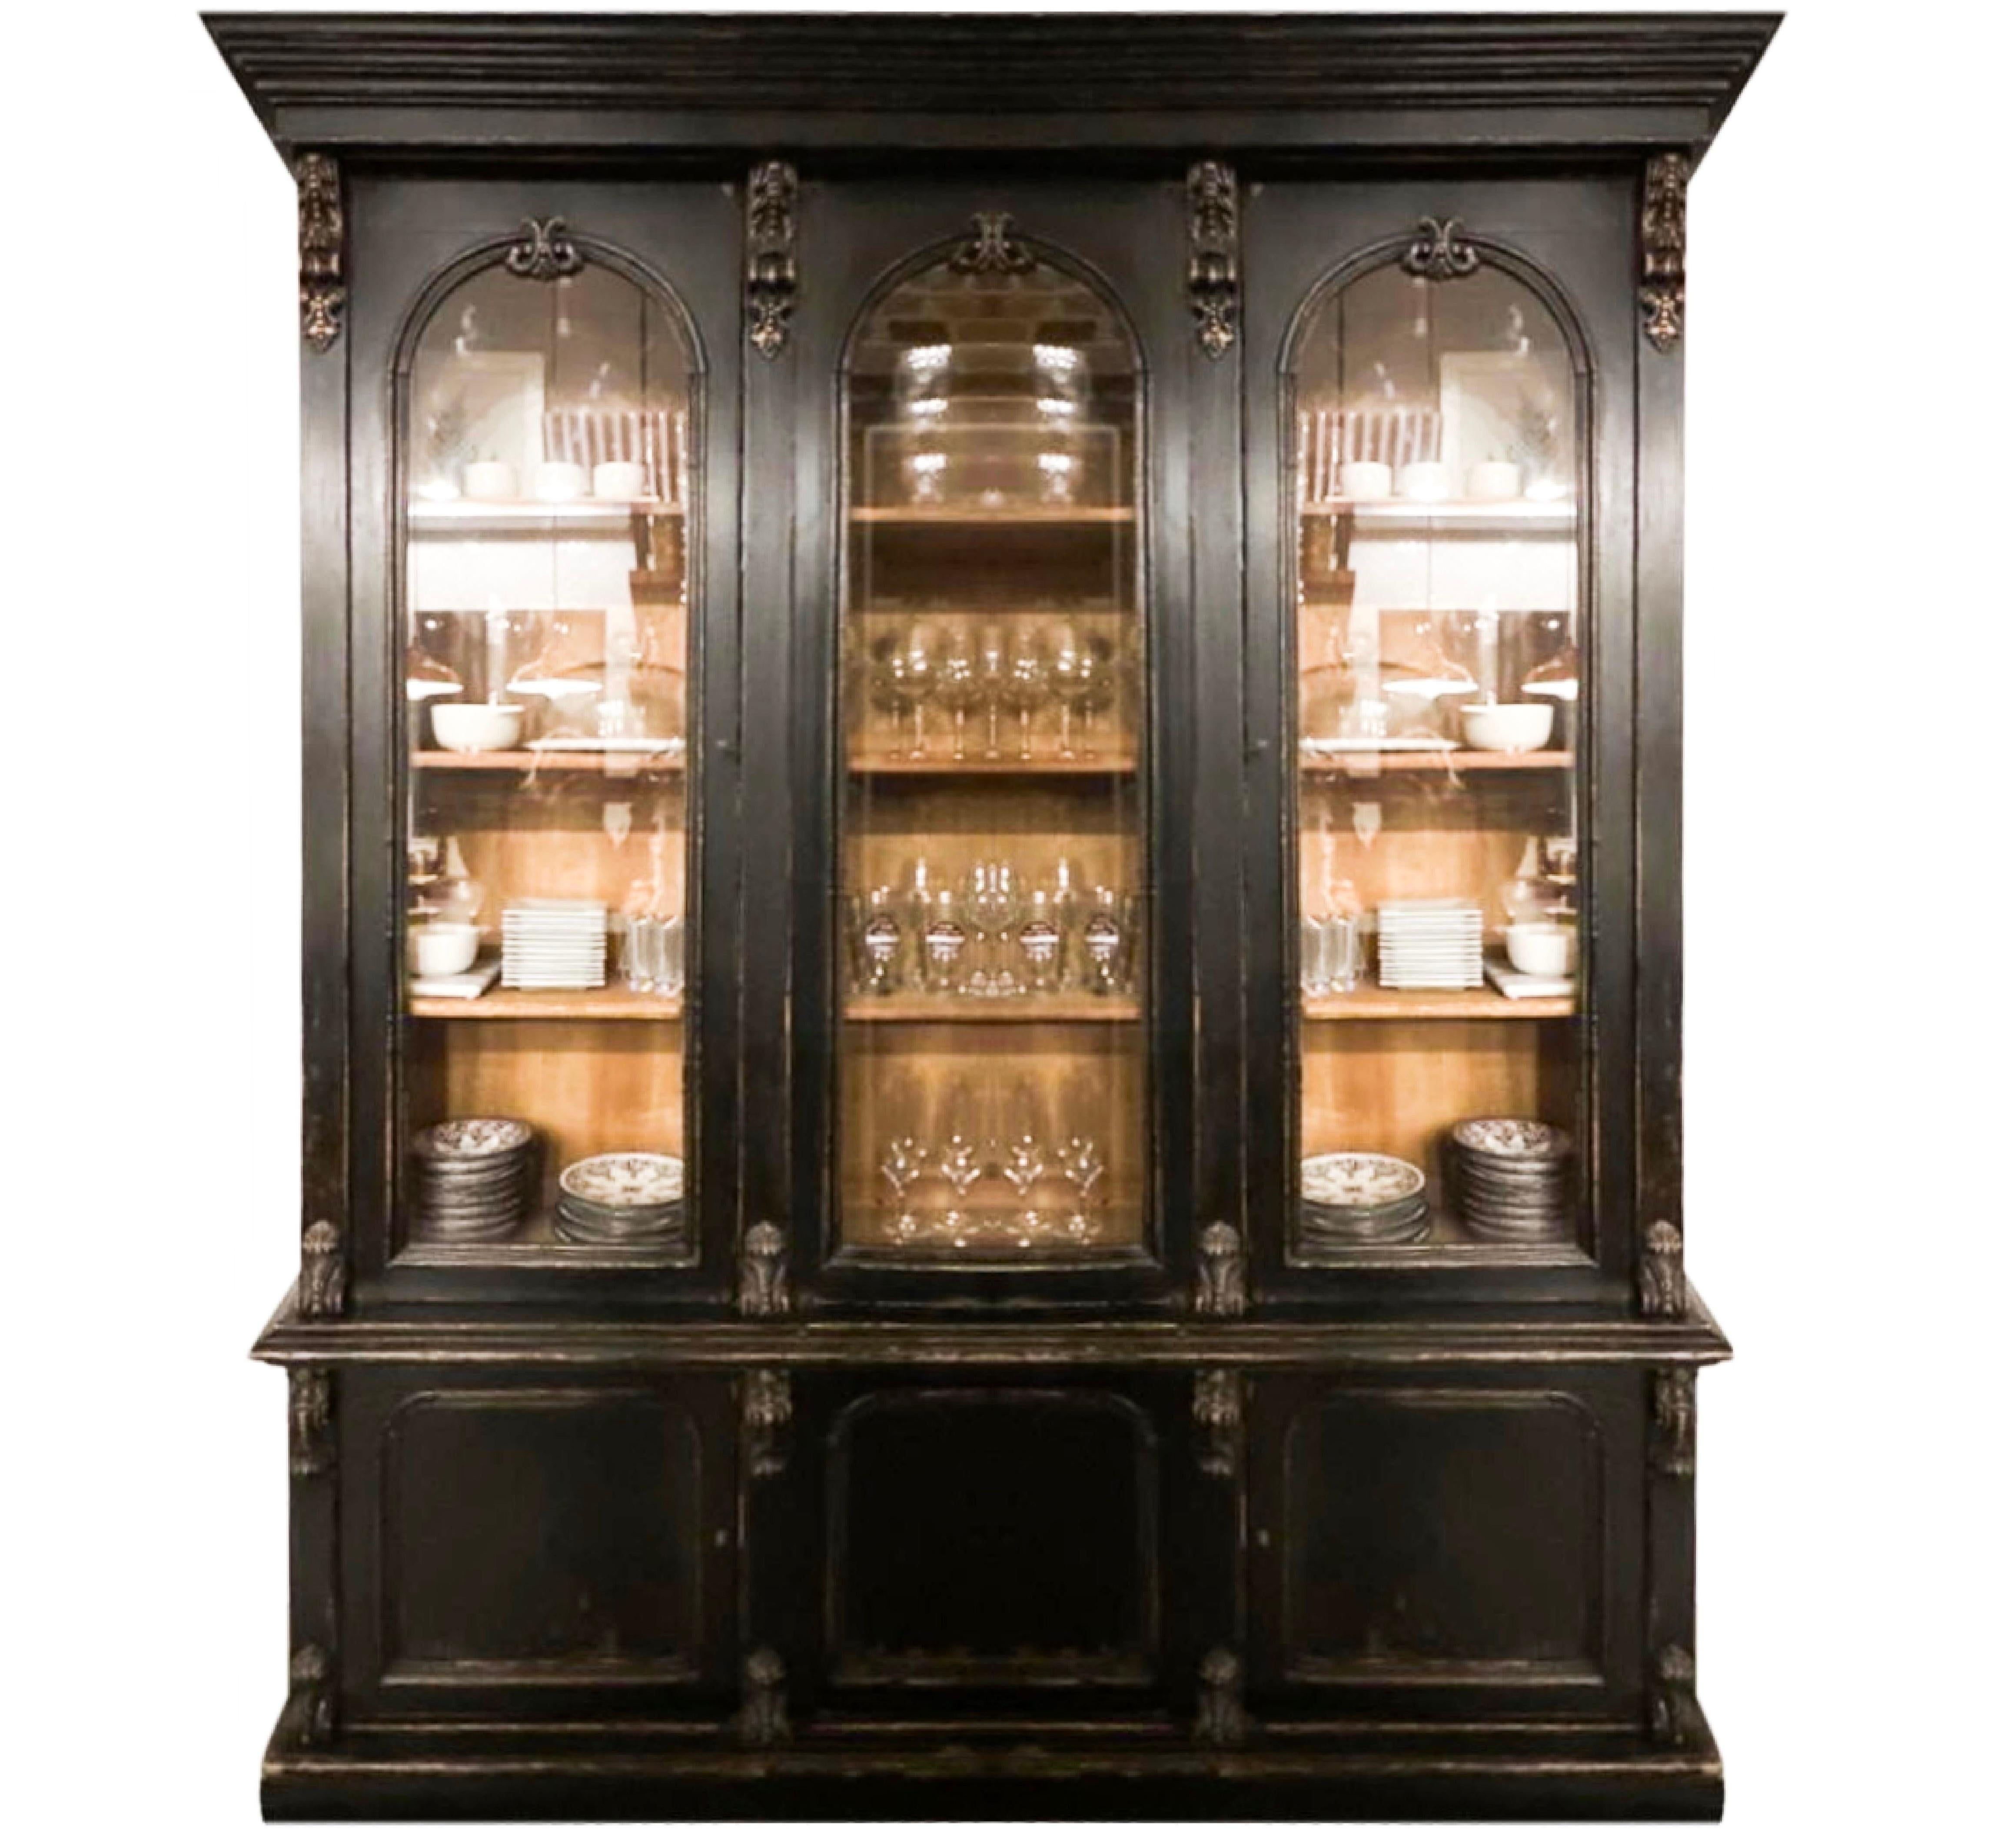 Wood Ebonized Walnut Bookcase Cabinet Victorian Renaissance Revival RL Van Thiel & Co